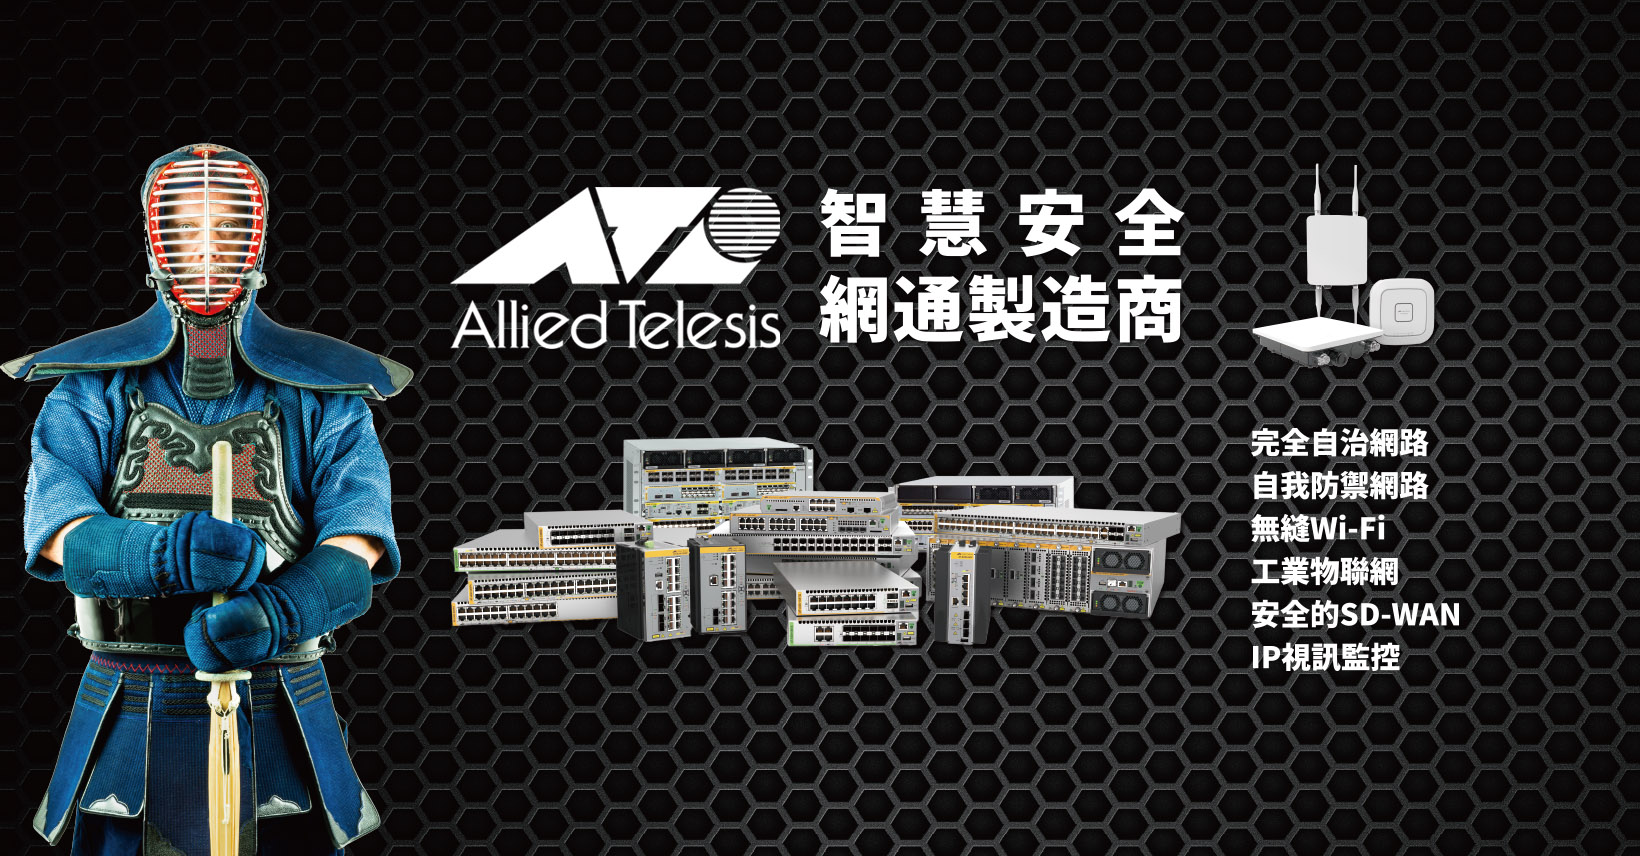 Allied Telesis 智慧安全網通製造商